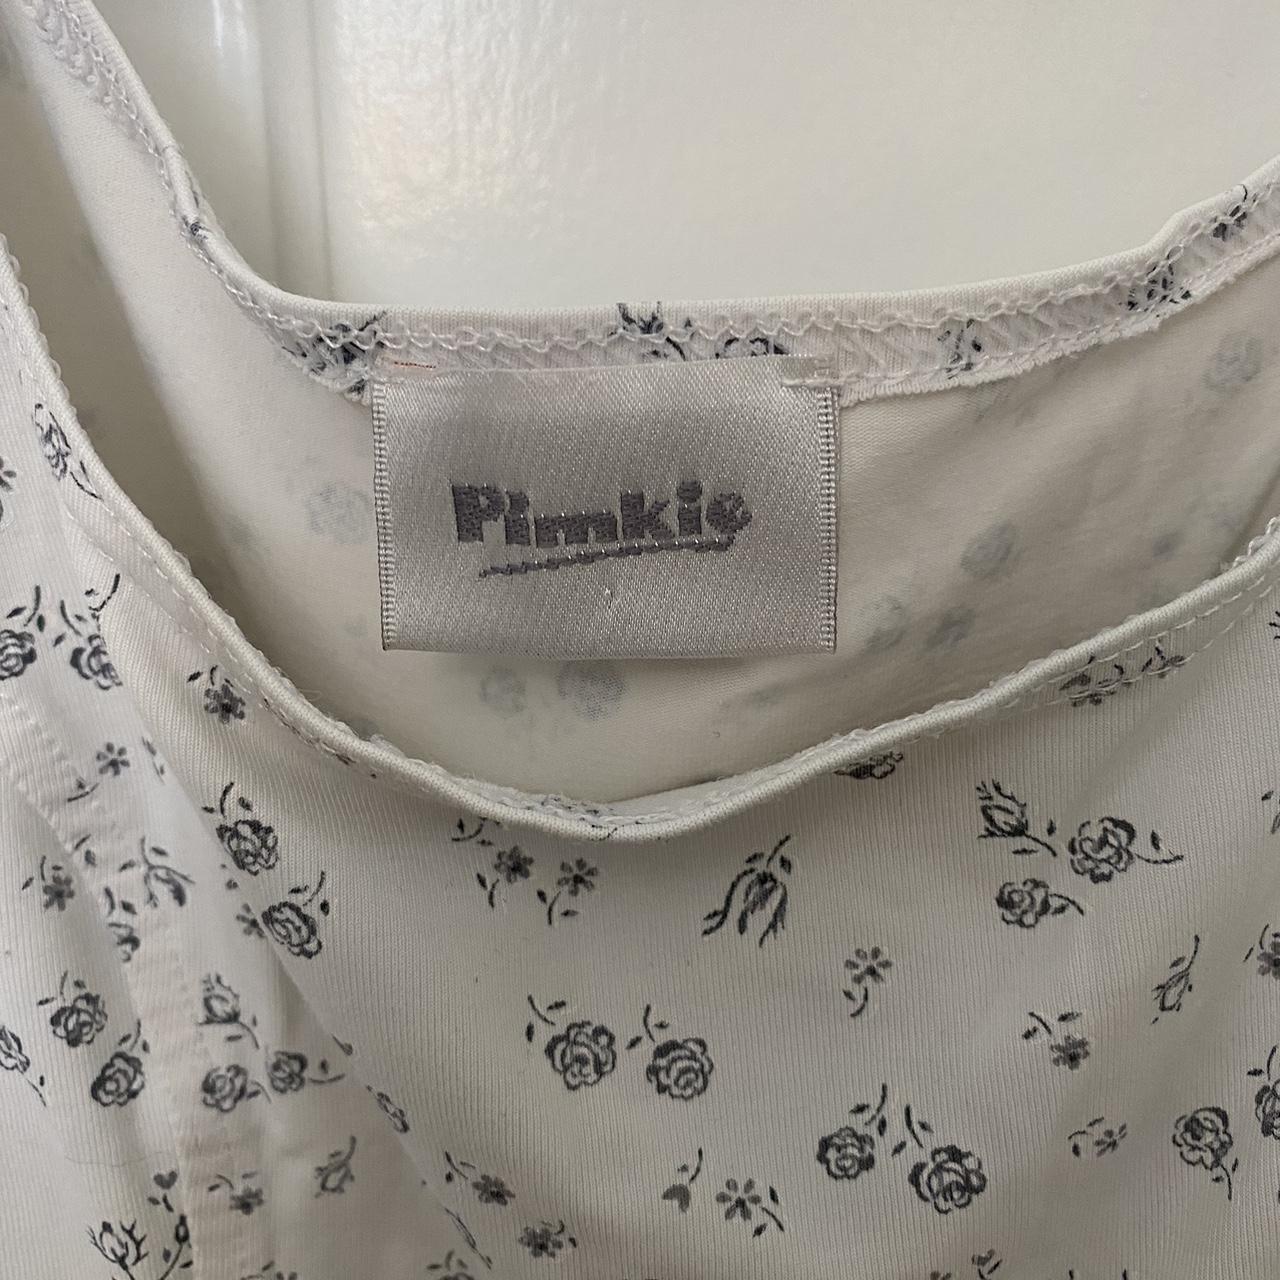 Pimkie Women's White and Grey Vest (3)